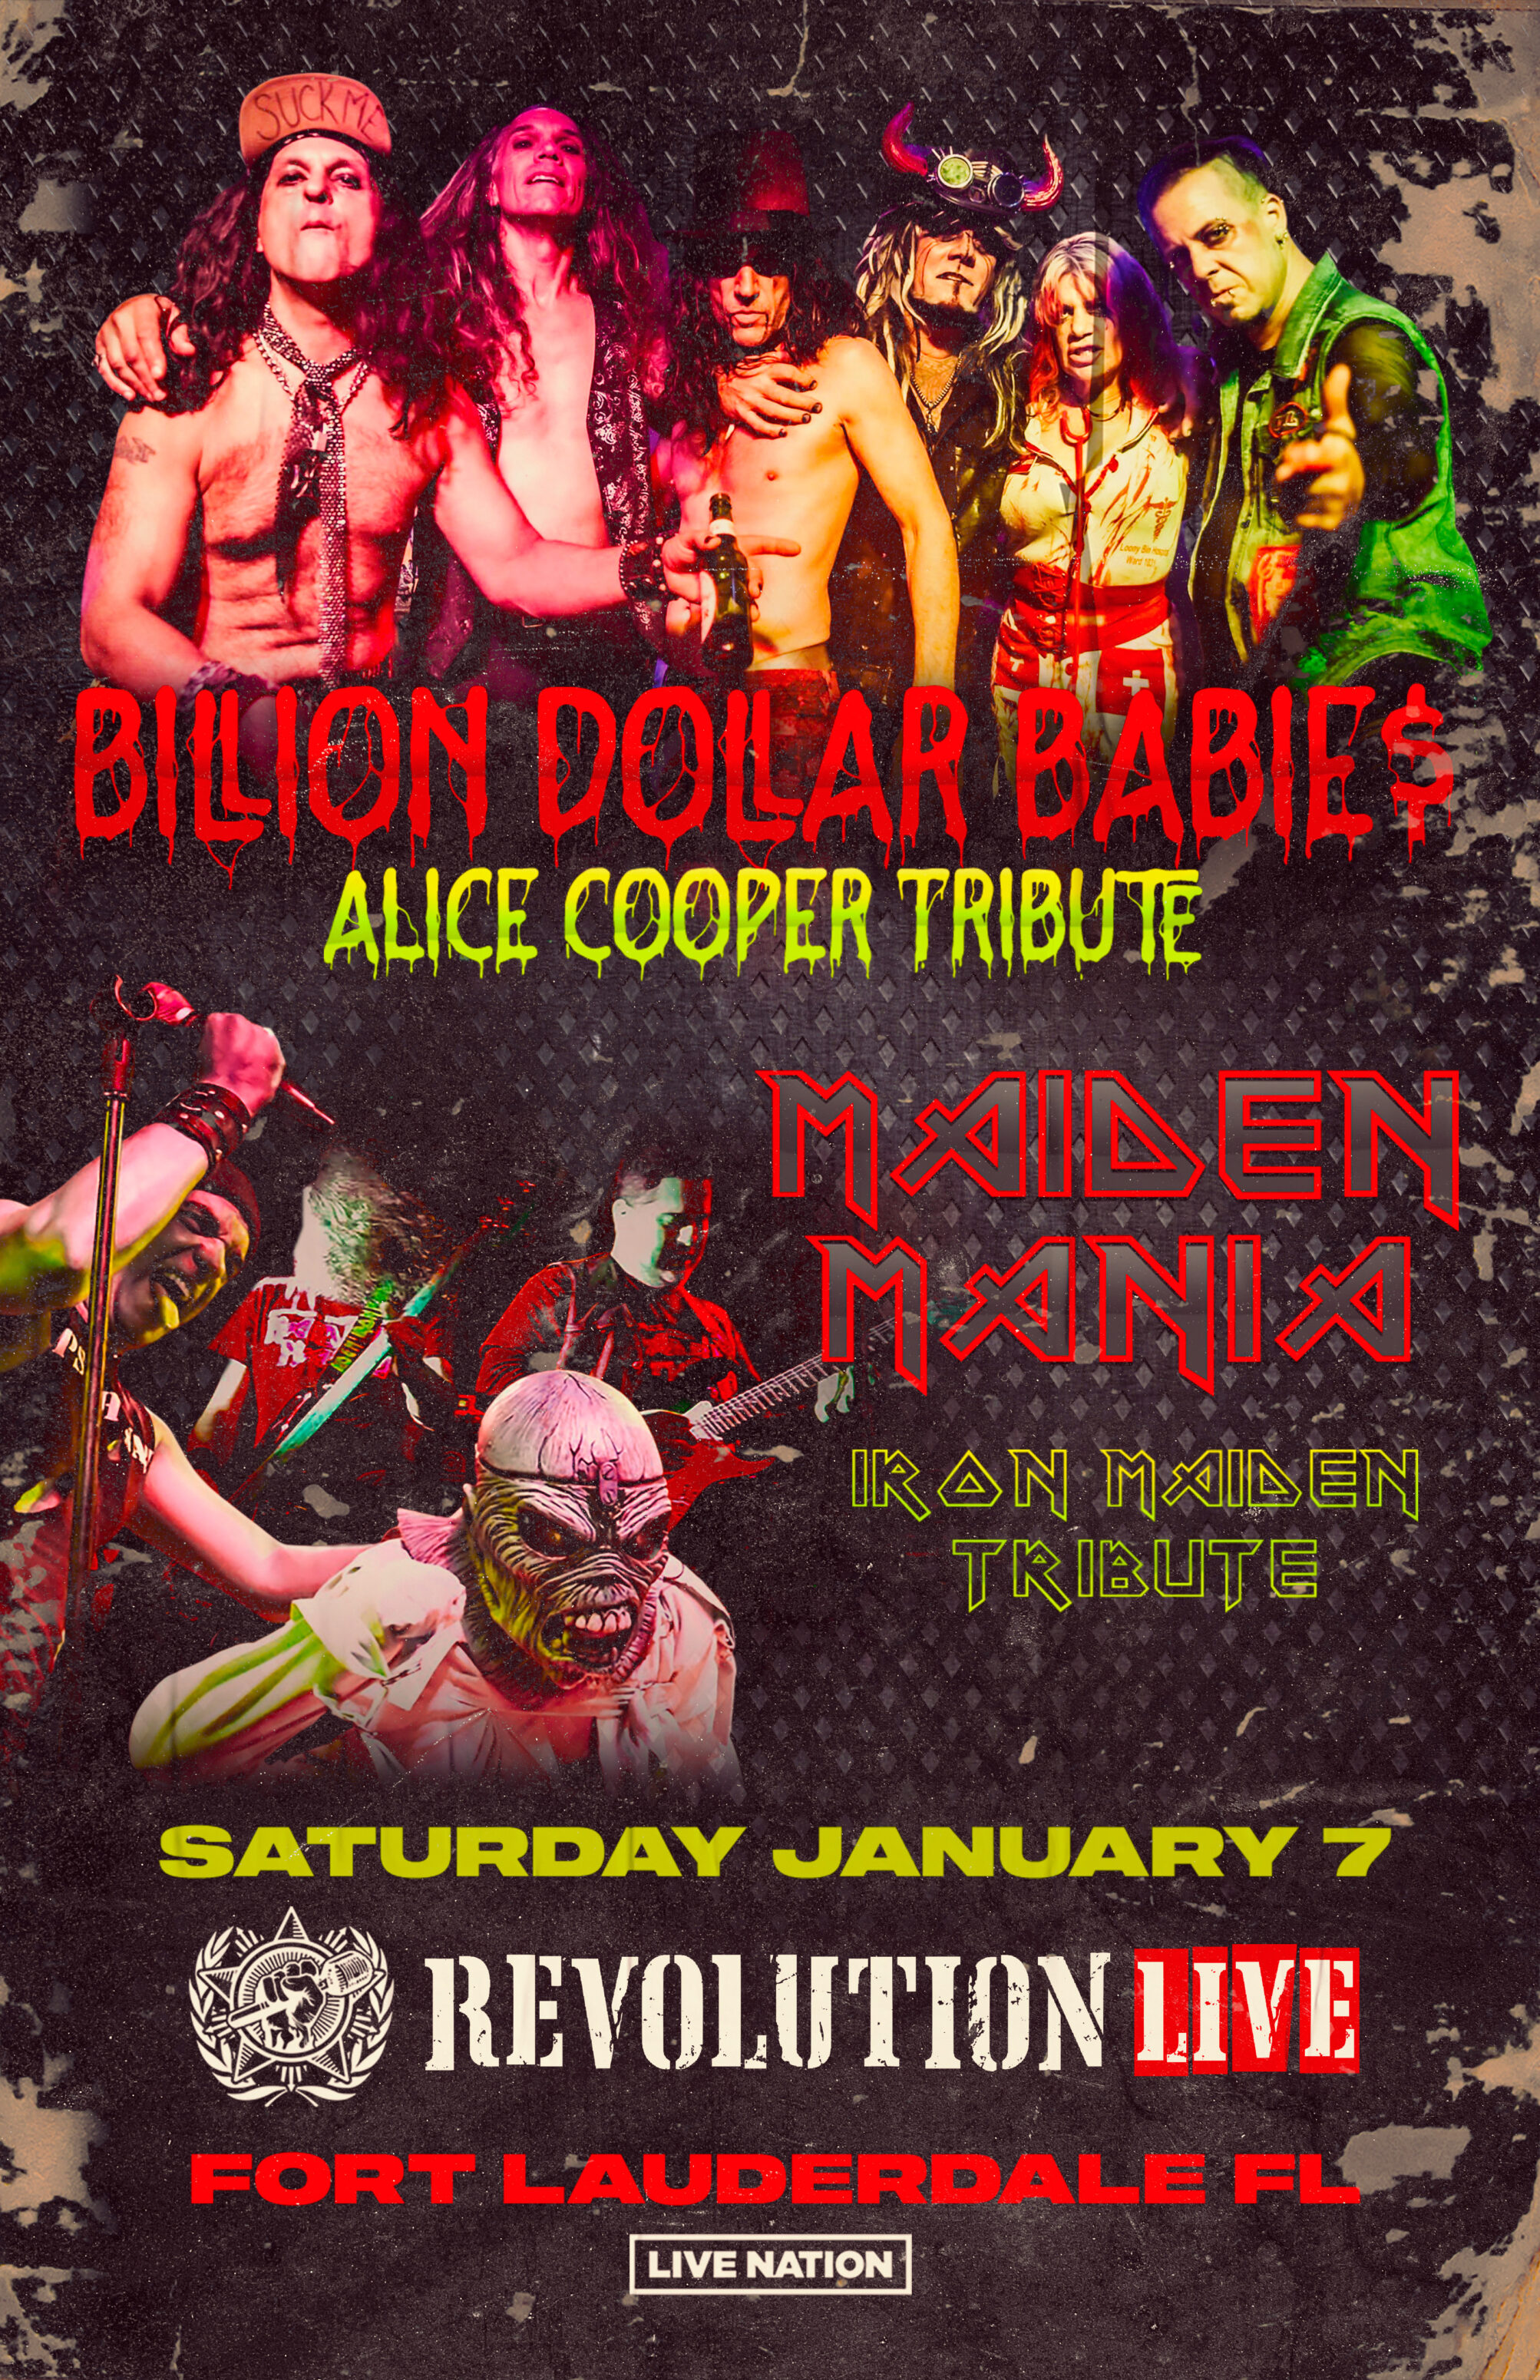 Billion Dollar Babie$ - Alice Cooper Tribute and Maiden Mania - Iron Maiden Tribute